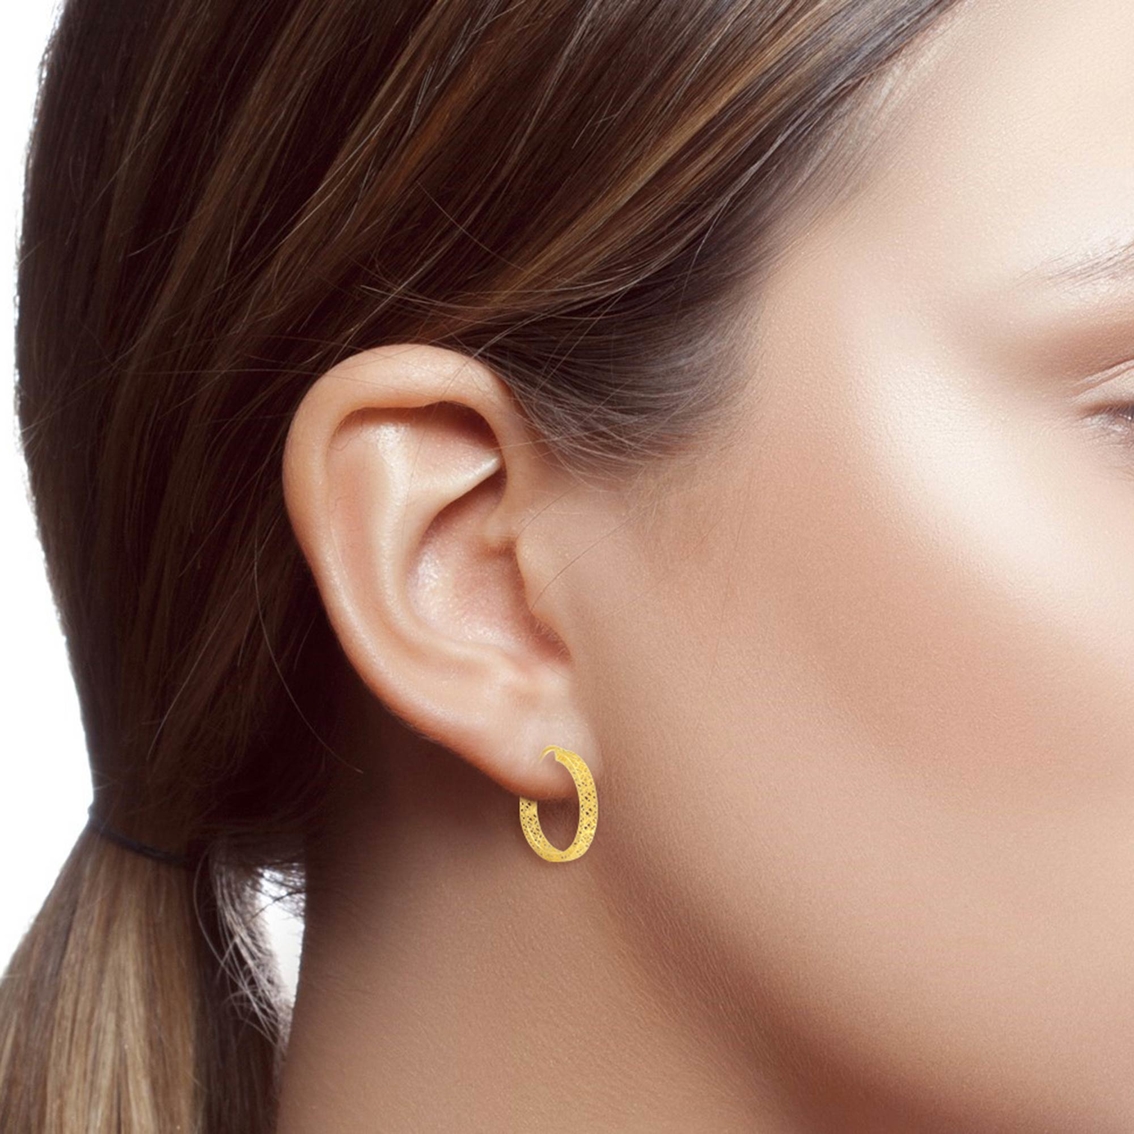 14K Yellow Gold Floral Filigree Texture Hoop Earrings - Image 2 of 2